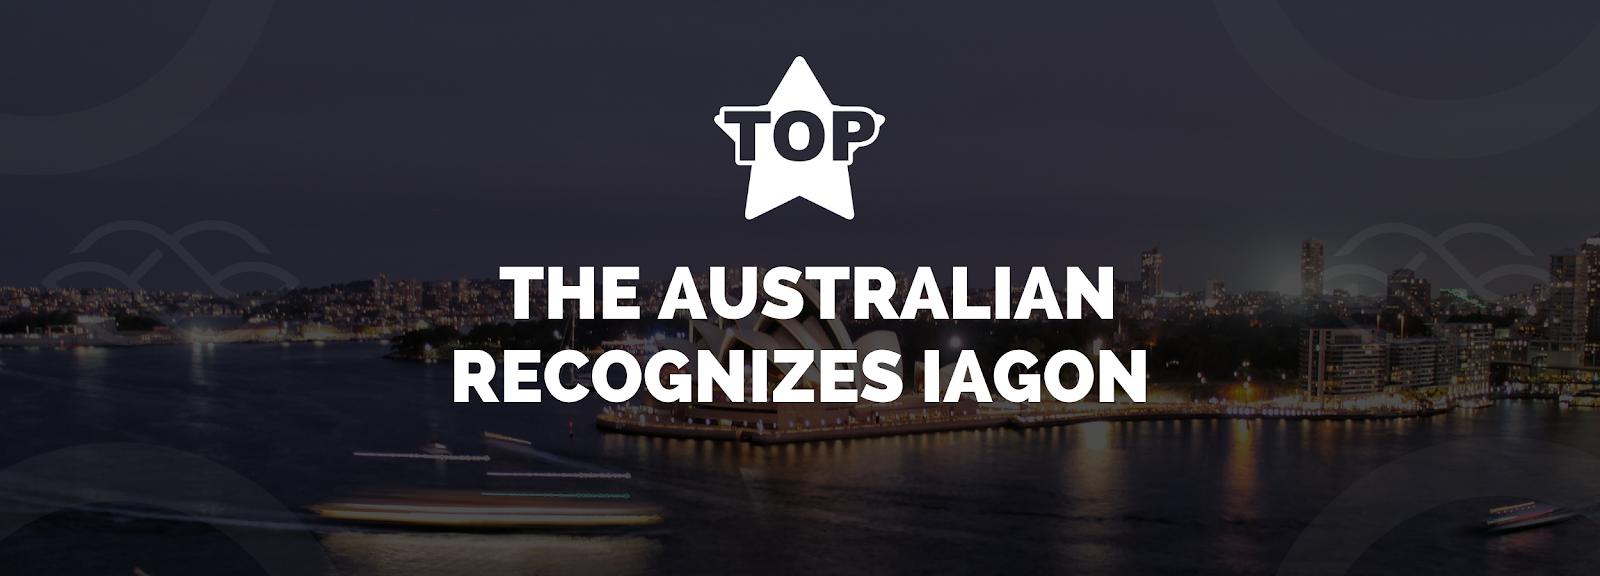 Leading National Newspaper: The Australian recognizes IAGON